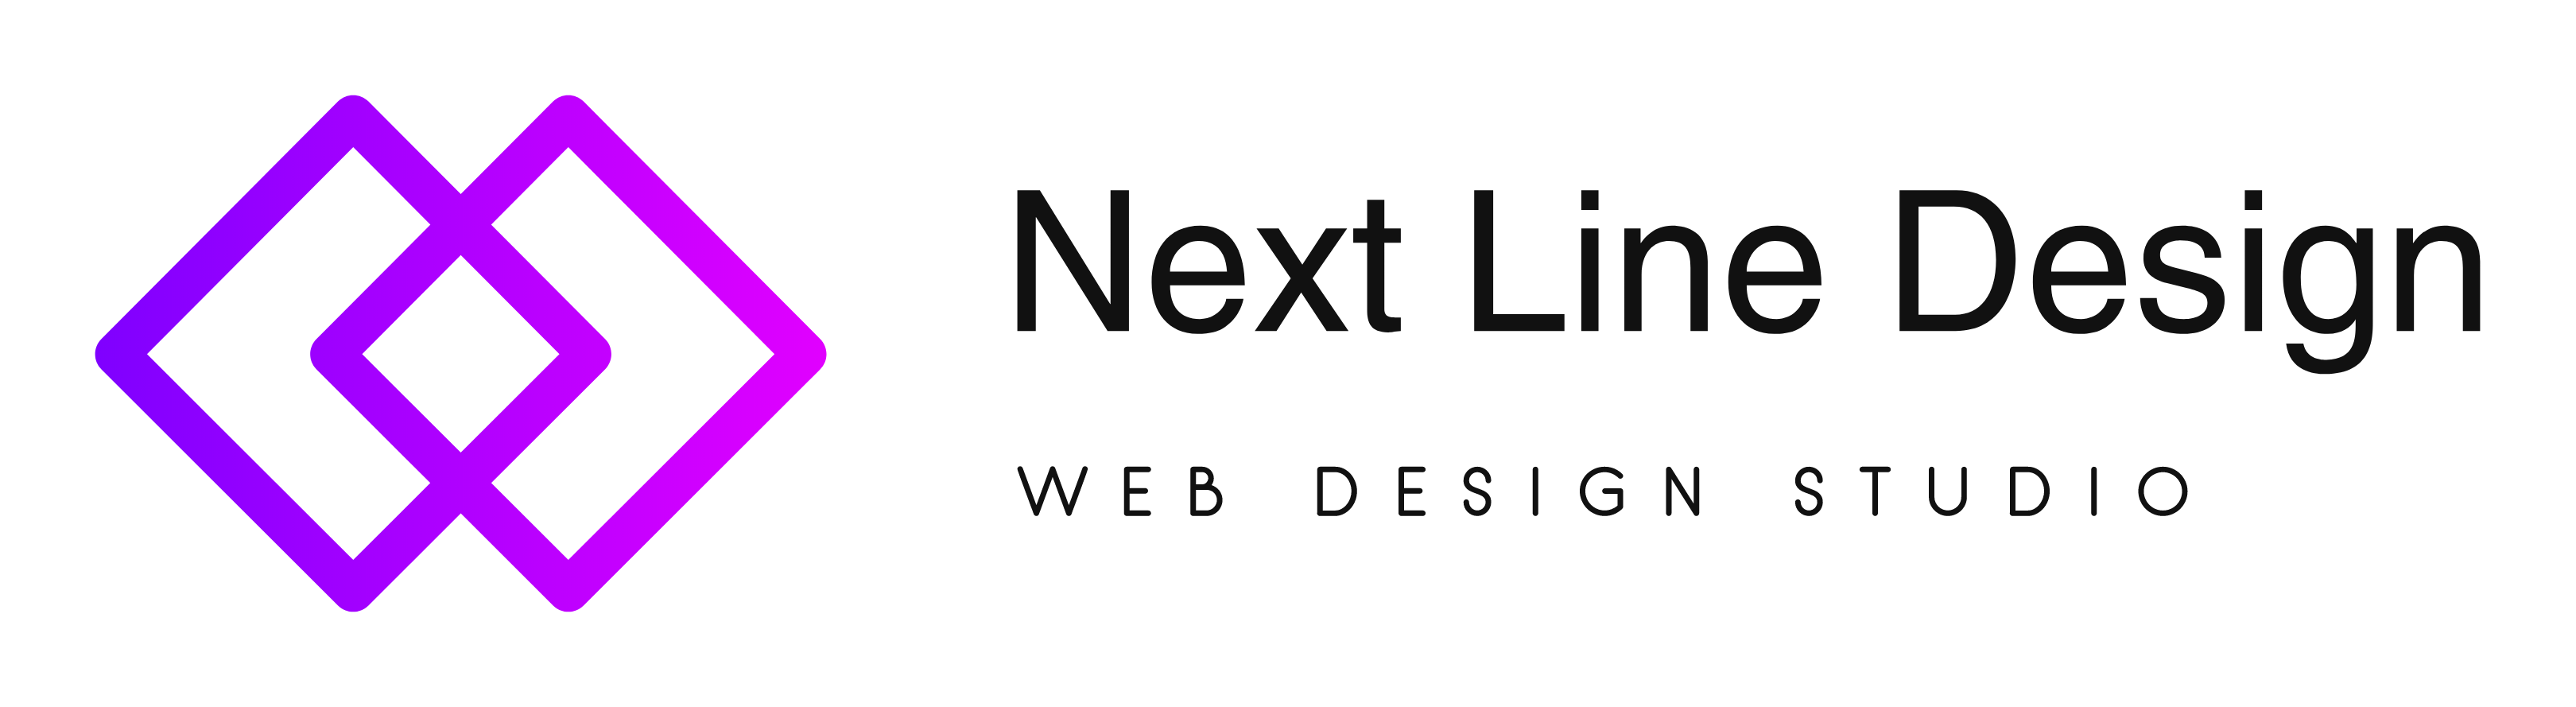 Next Line design Logo - Website Design Development - Digital Marketing - Logo Design